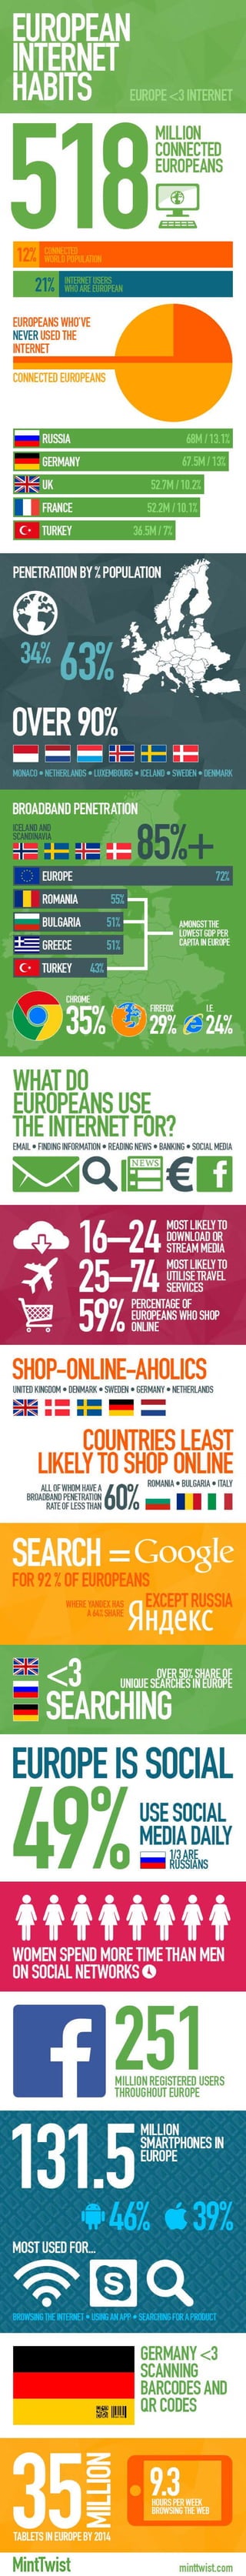 European Internet Habits Infographic